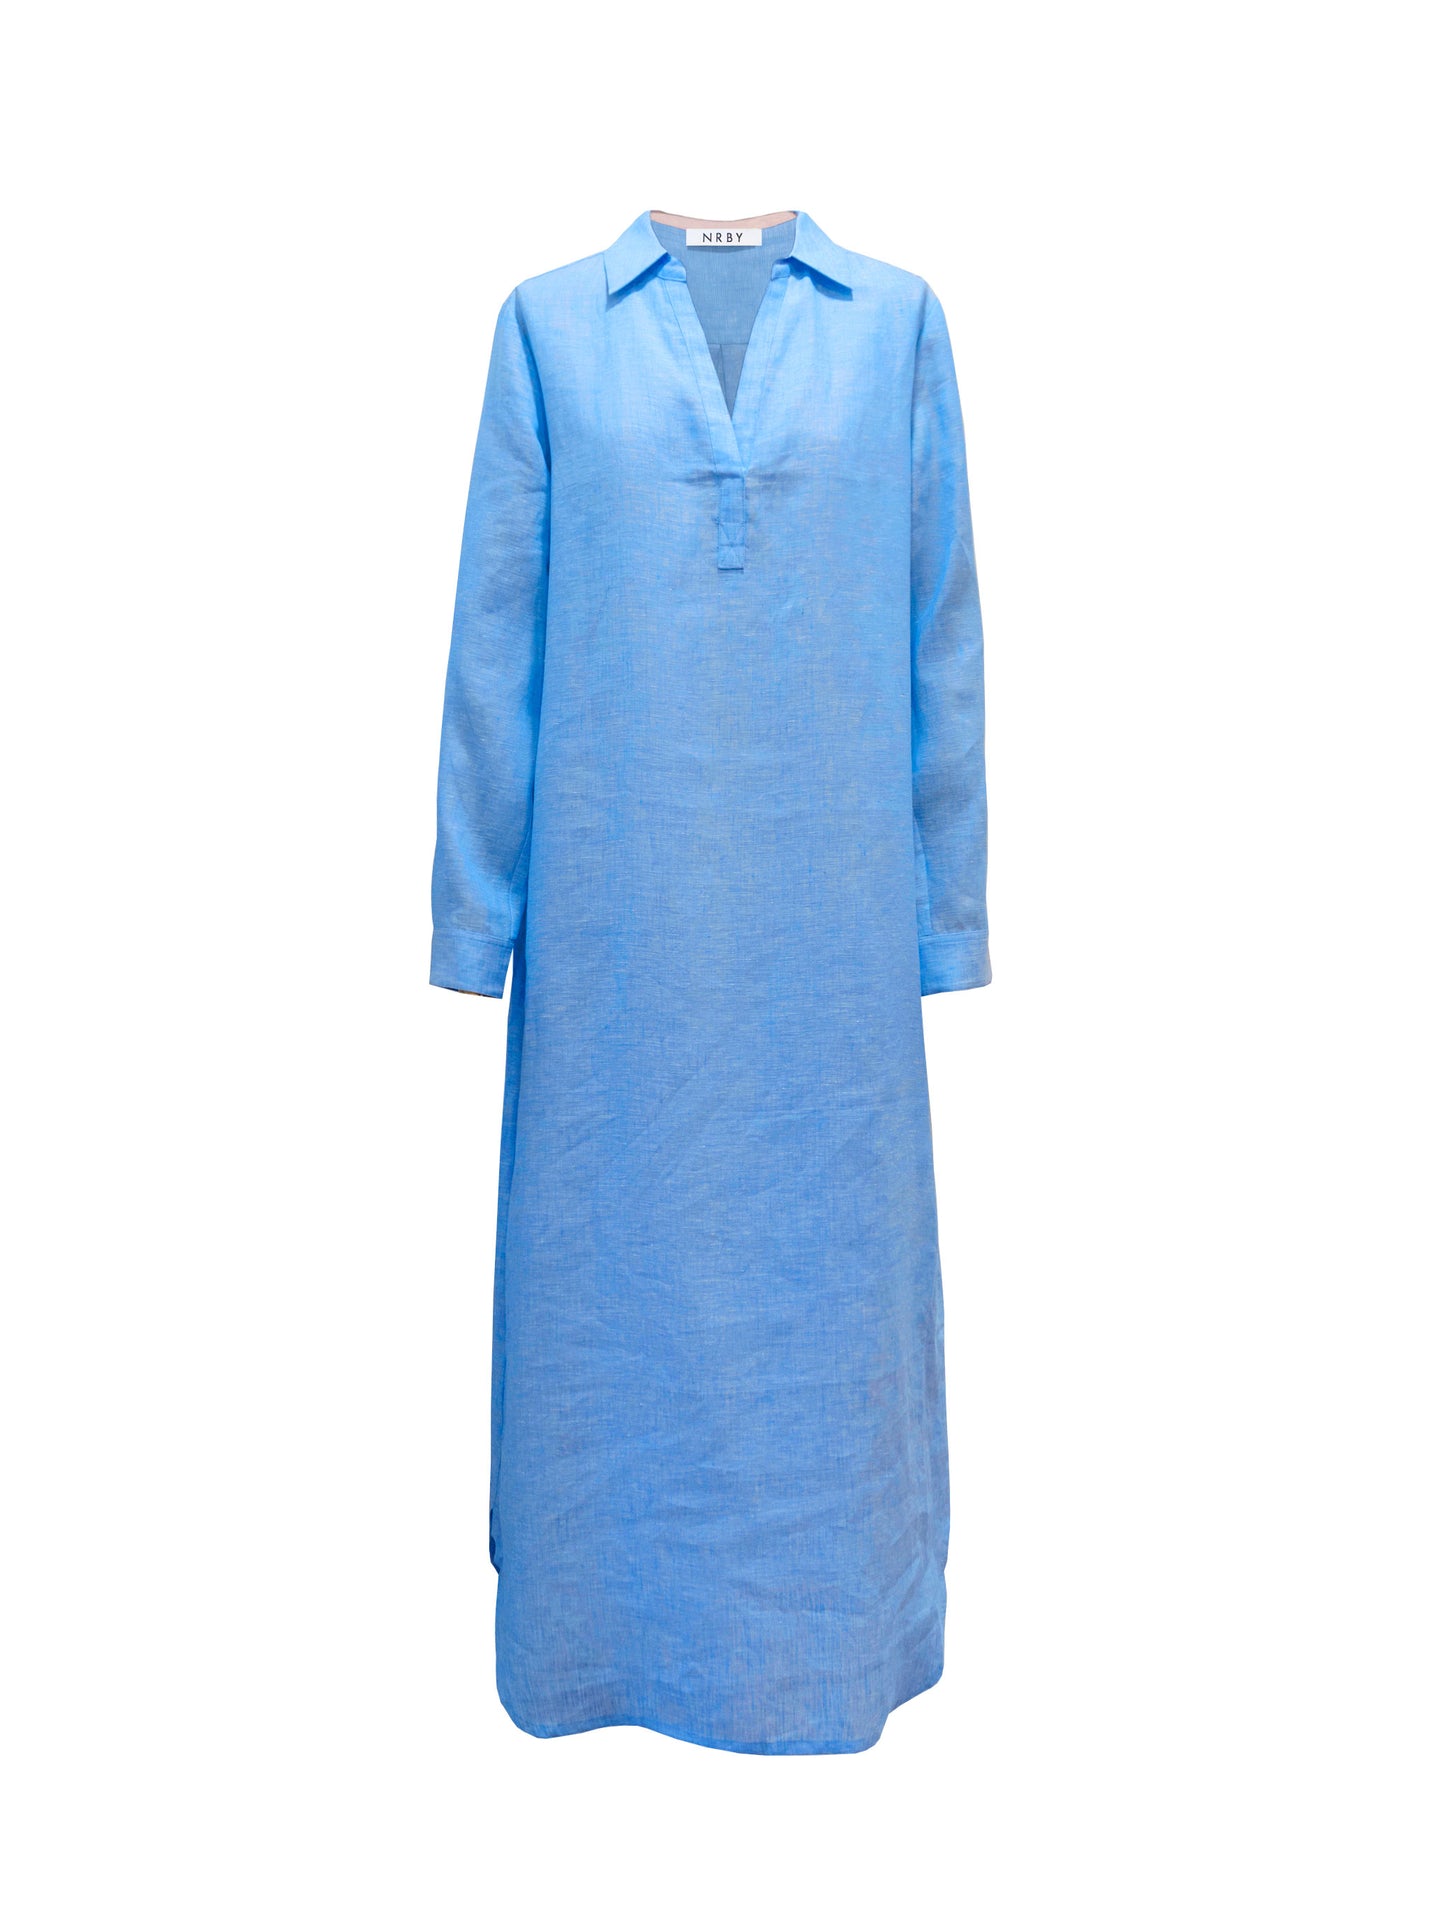 Chrissie linen maxi dress - Pale Blue Chambray